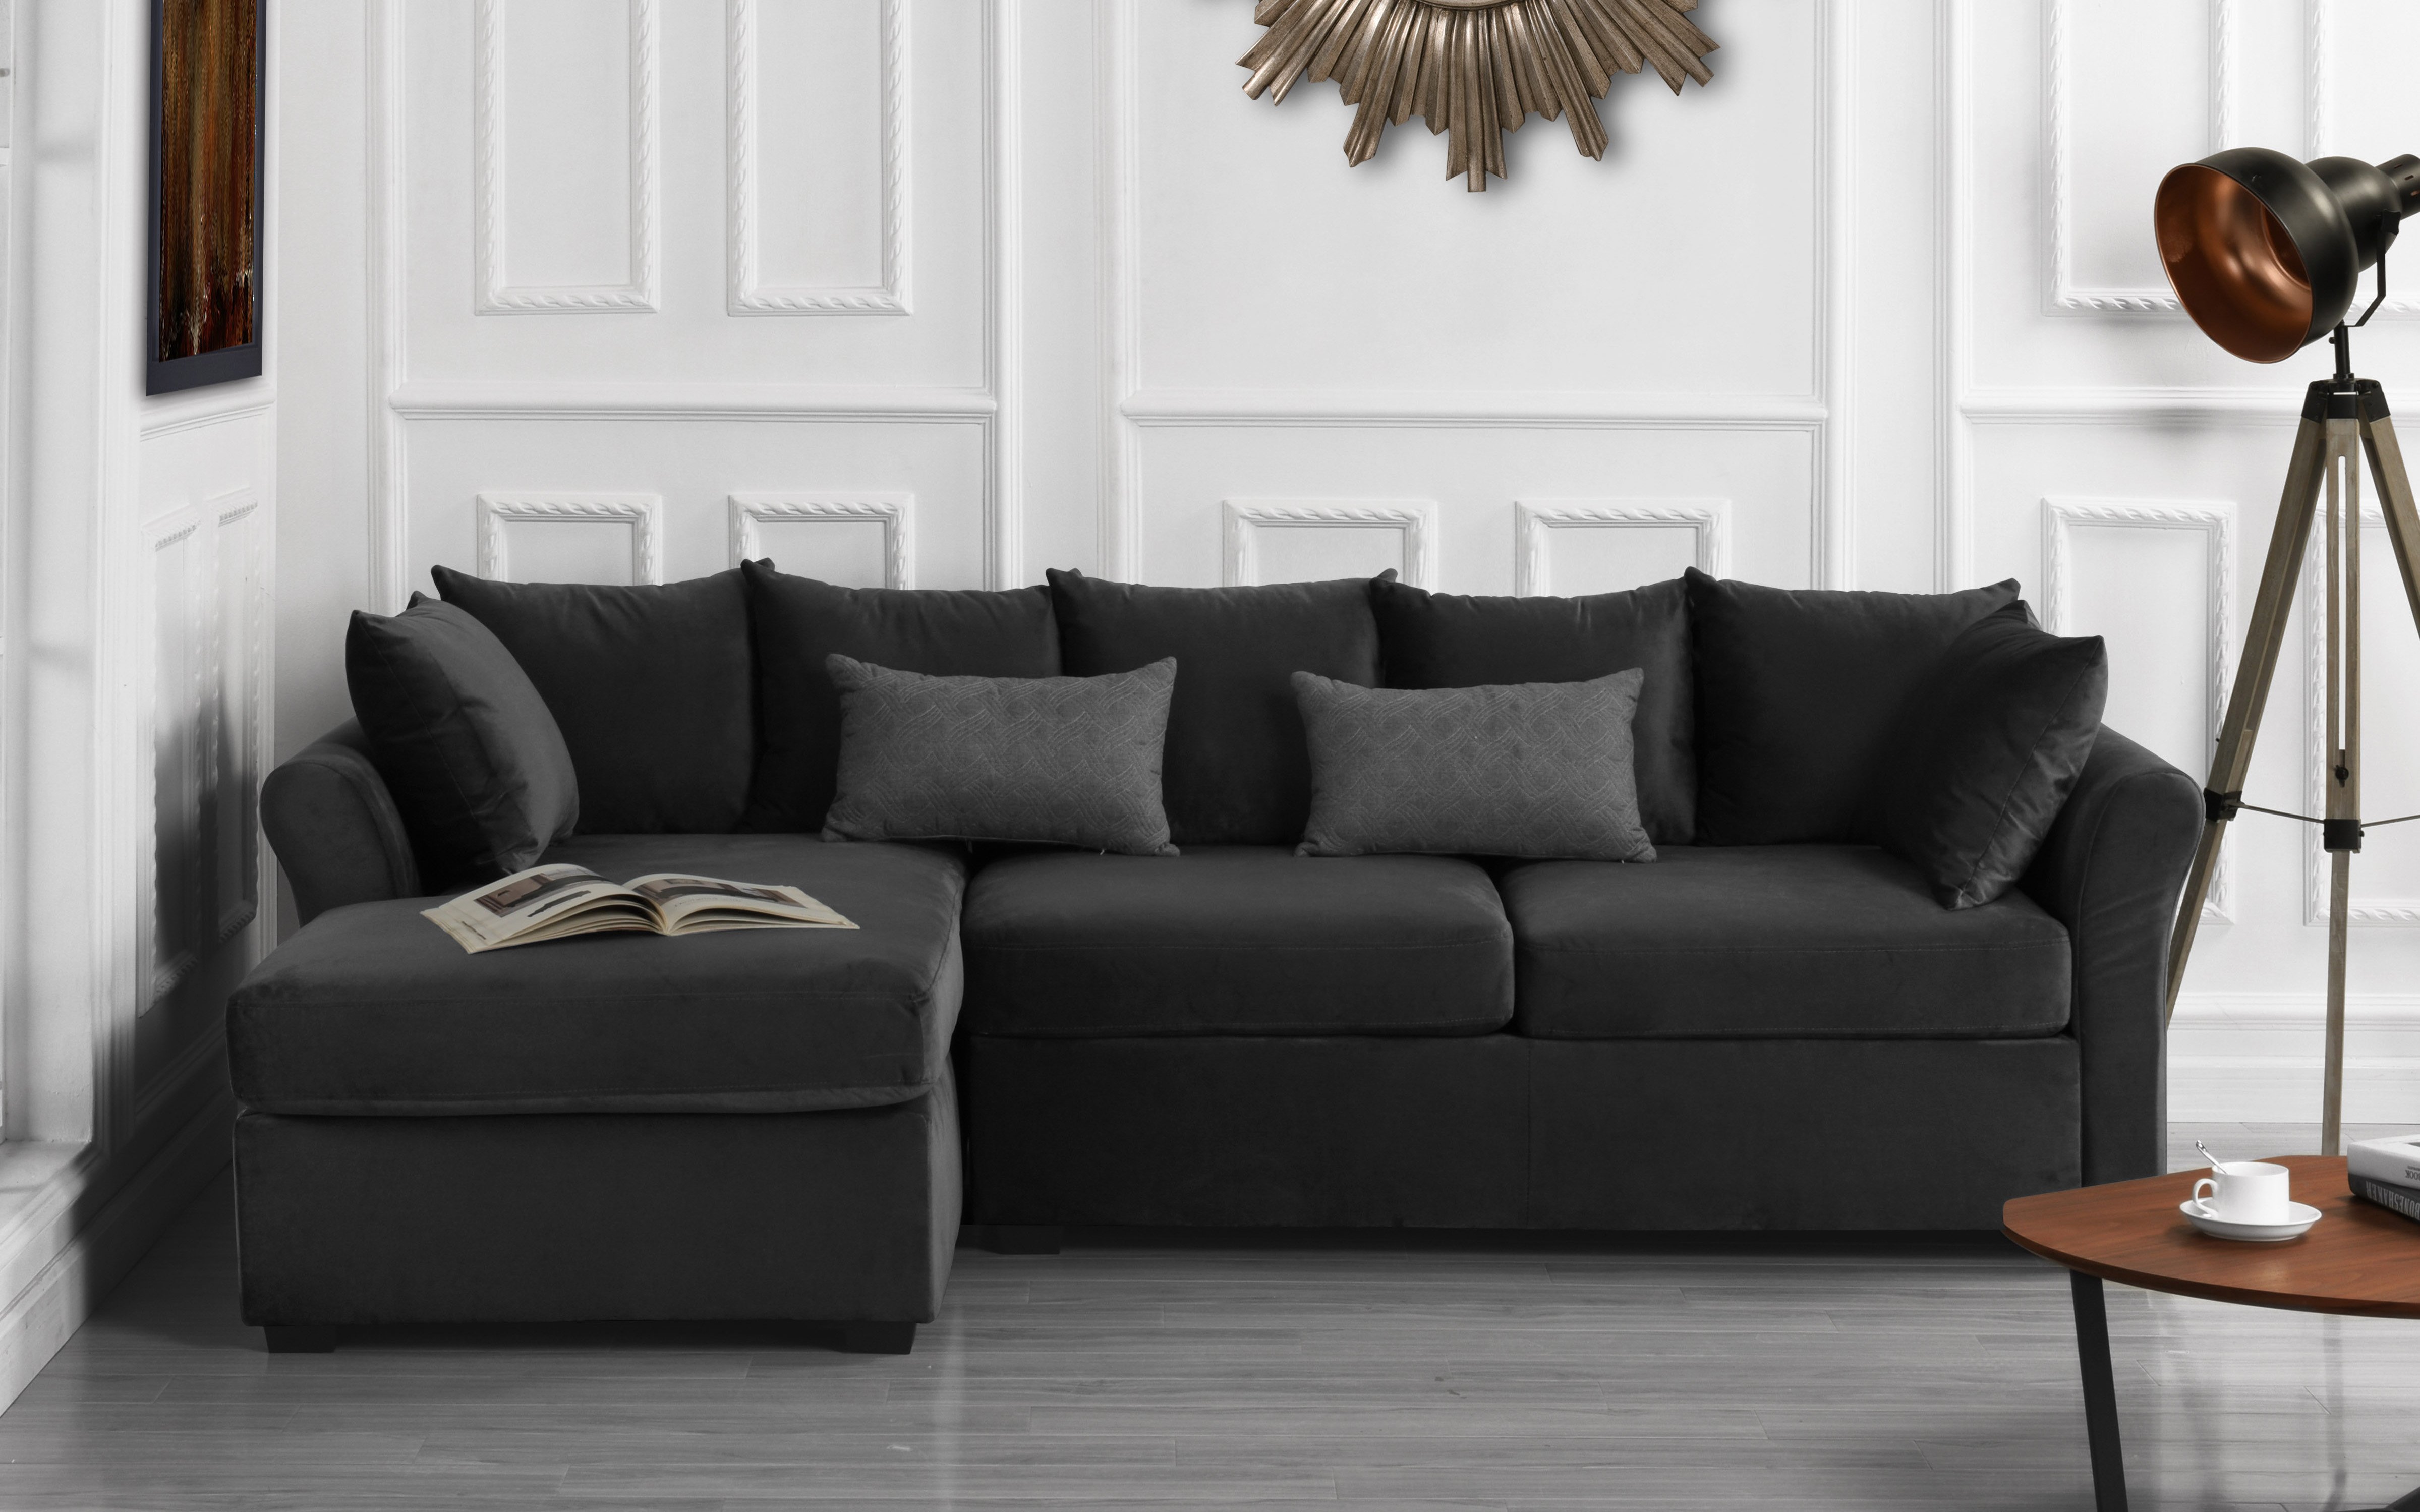 Comfortable Sectional Sofa For Sale